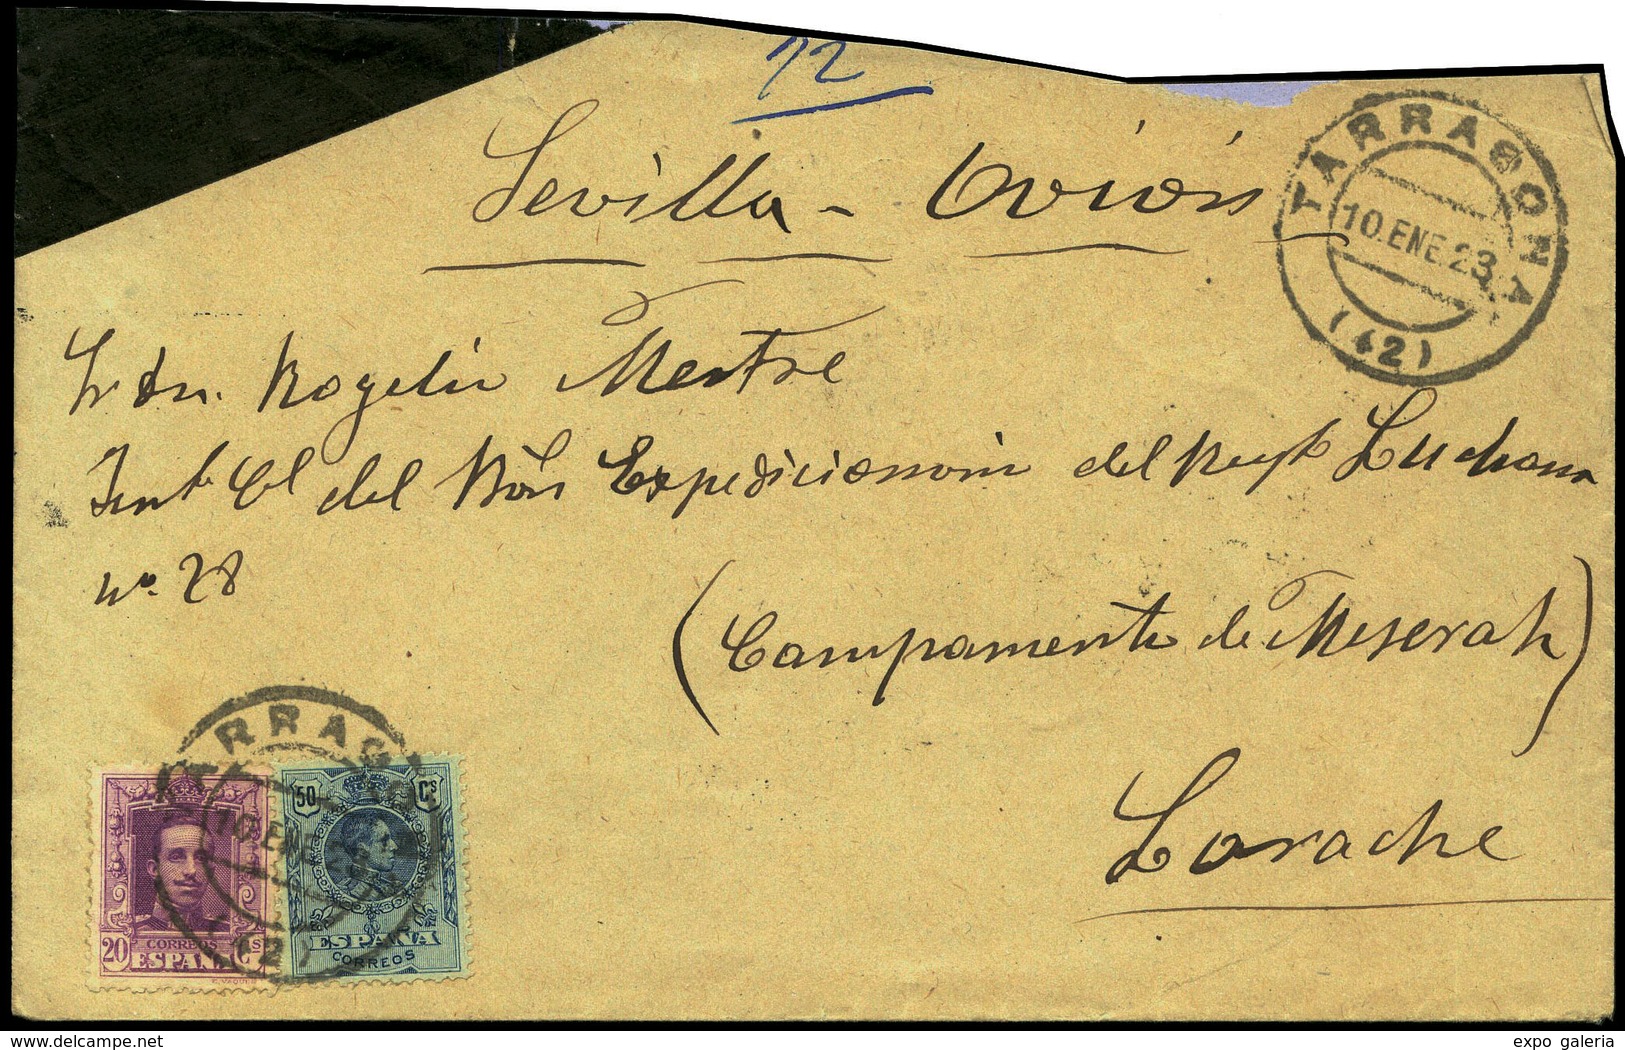 Ed.  277+316 - 1923. Carta Cda Correo Aereo De Tarragona Al Frente En Larache. - Unused Stamps